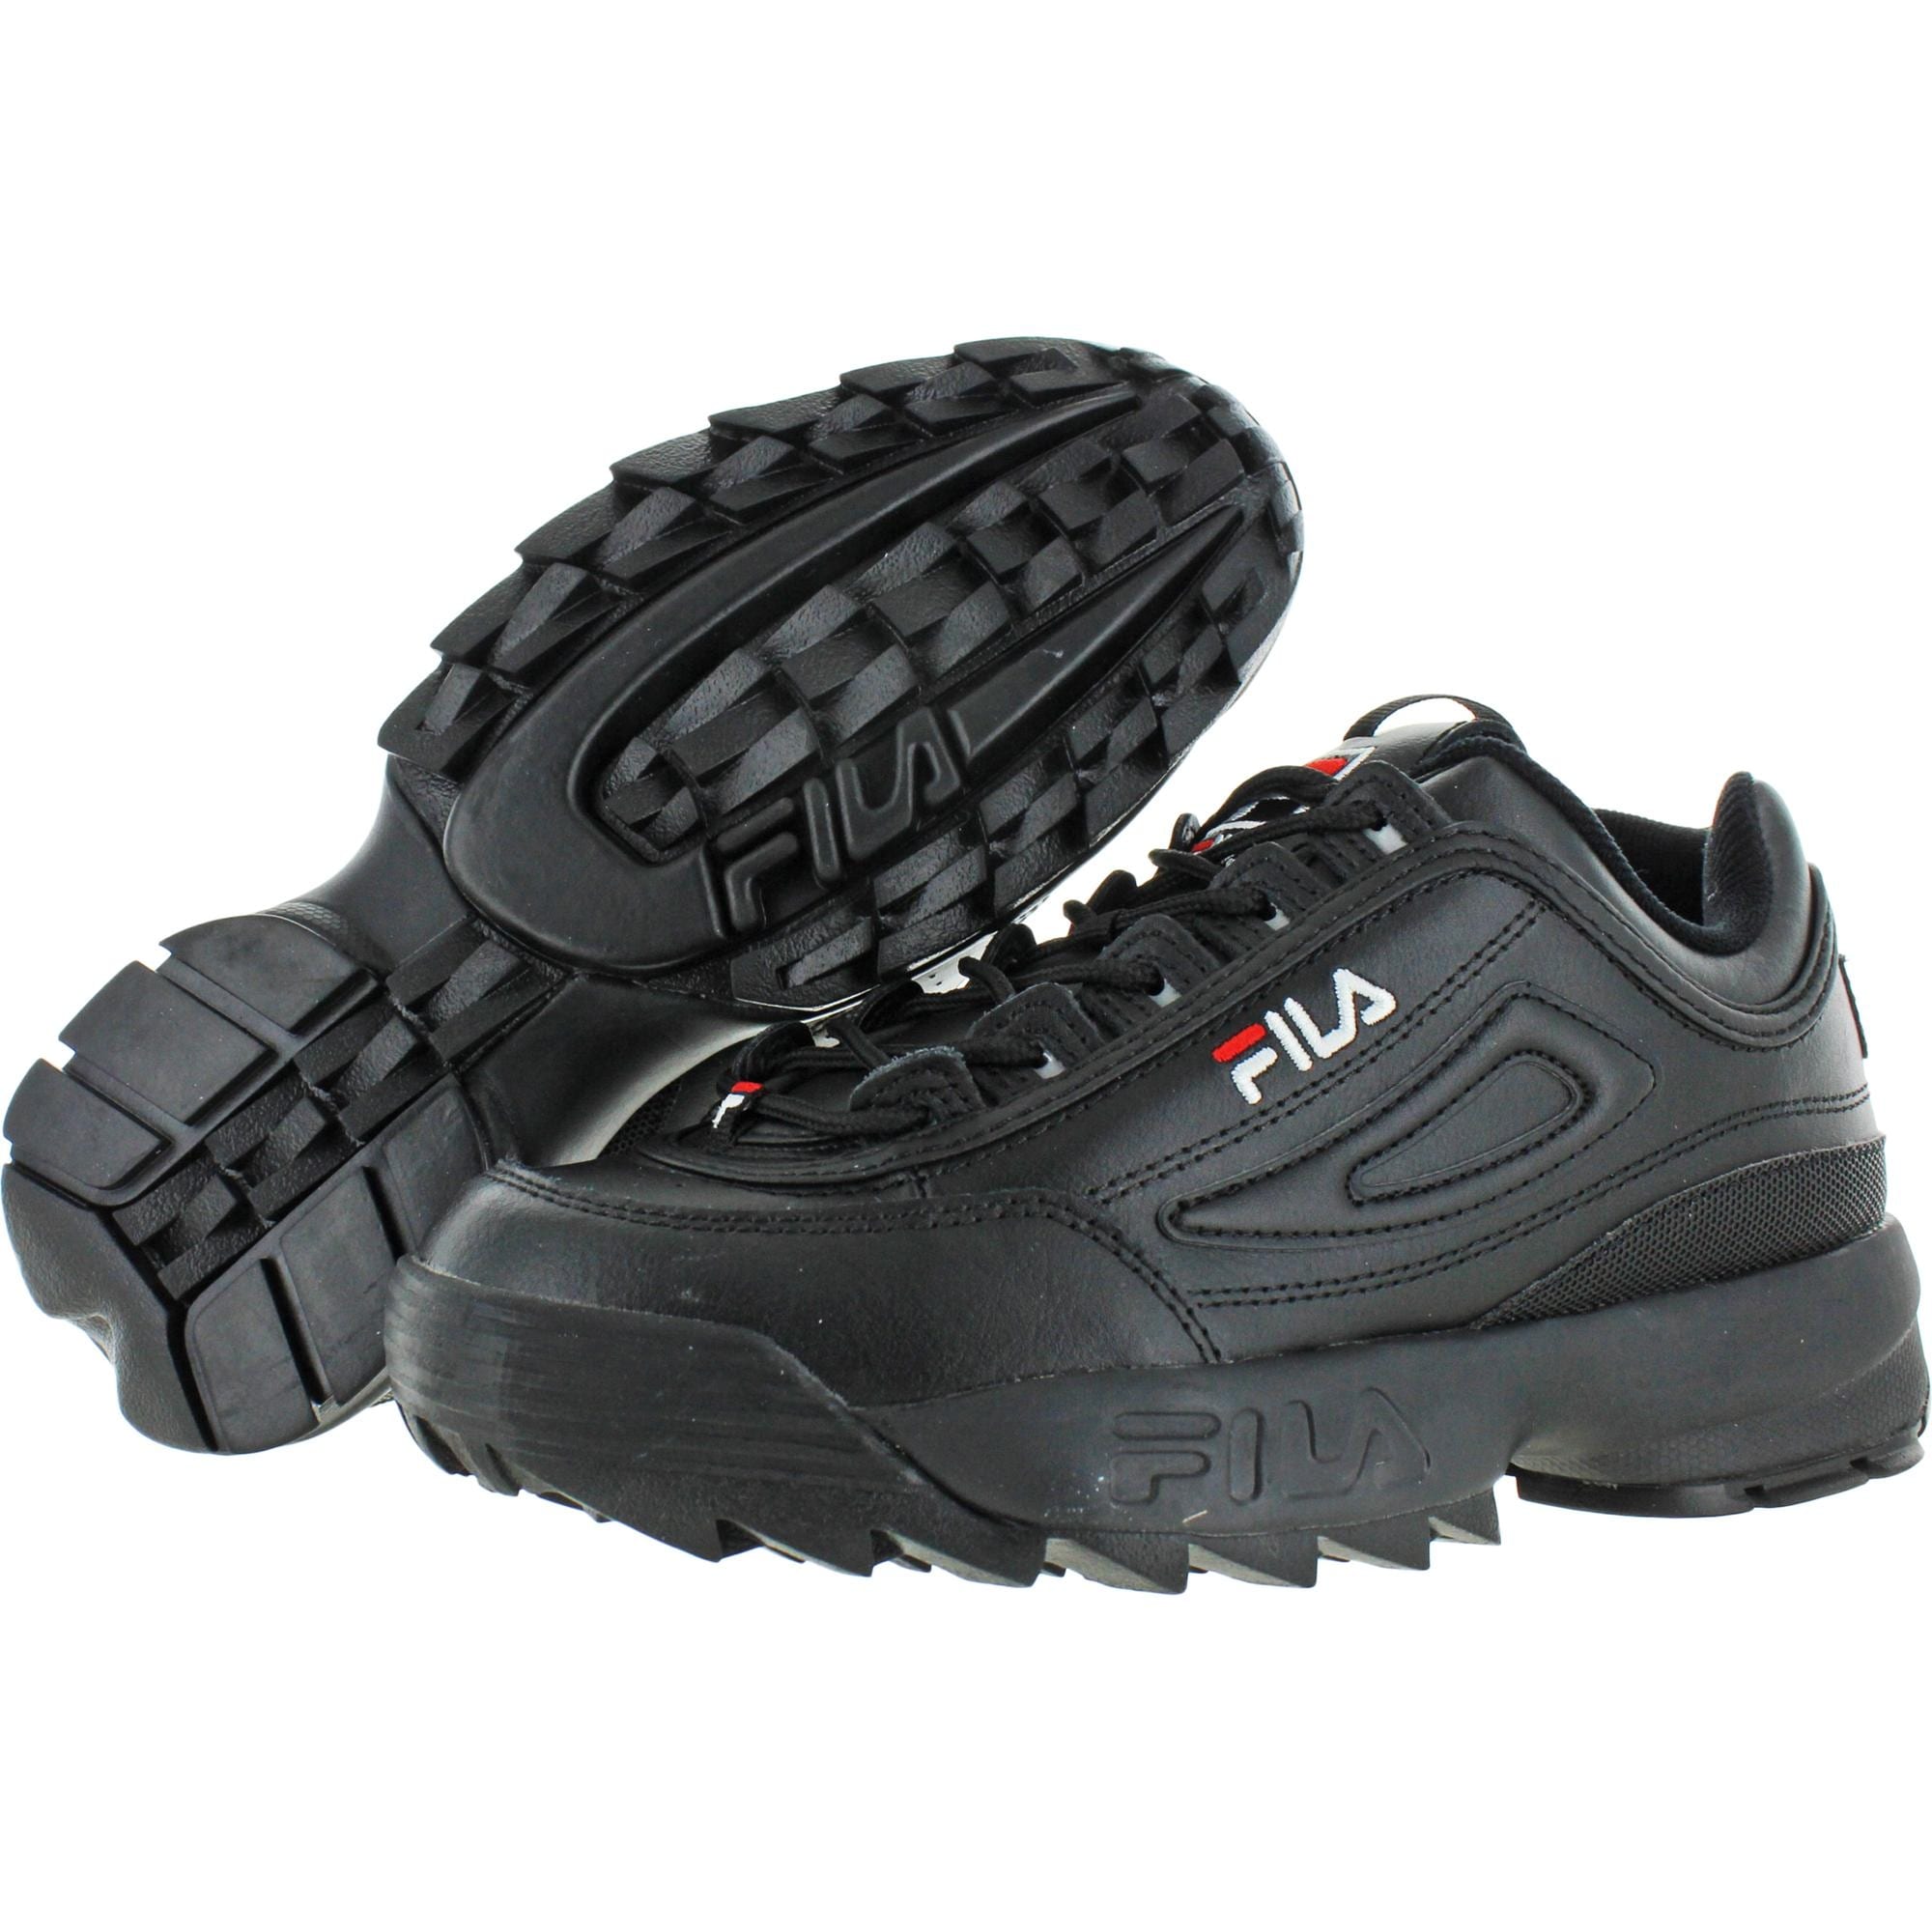 fila black leather shoes